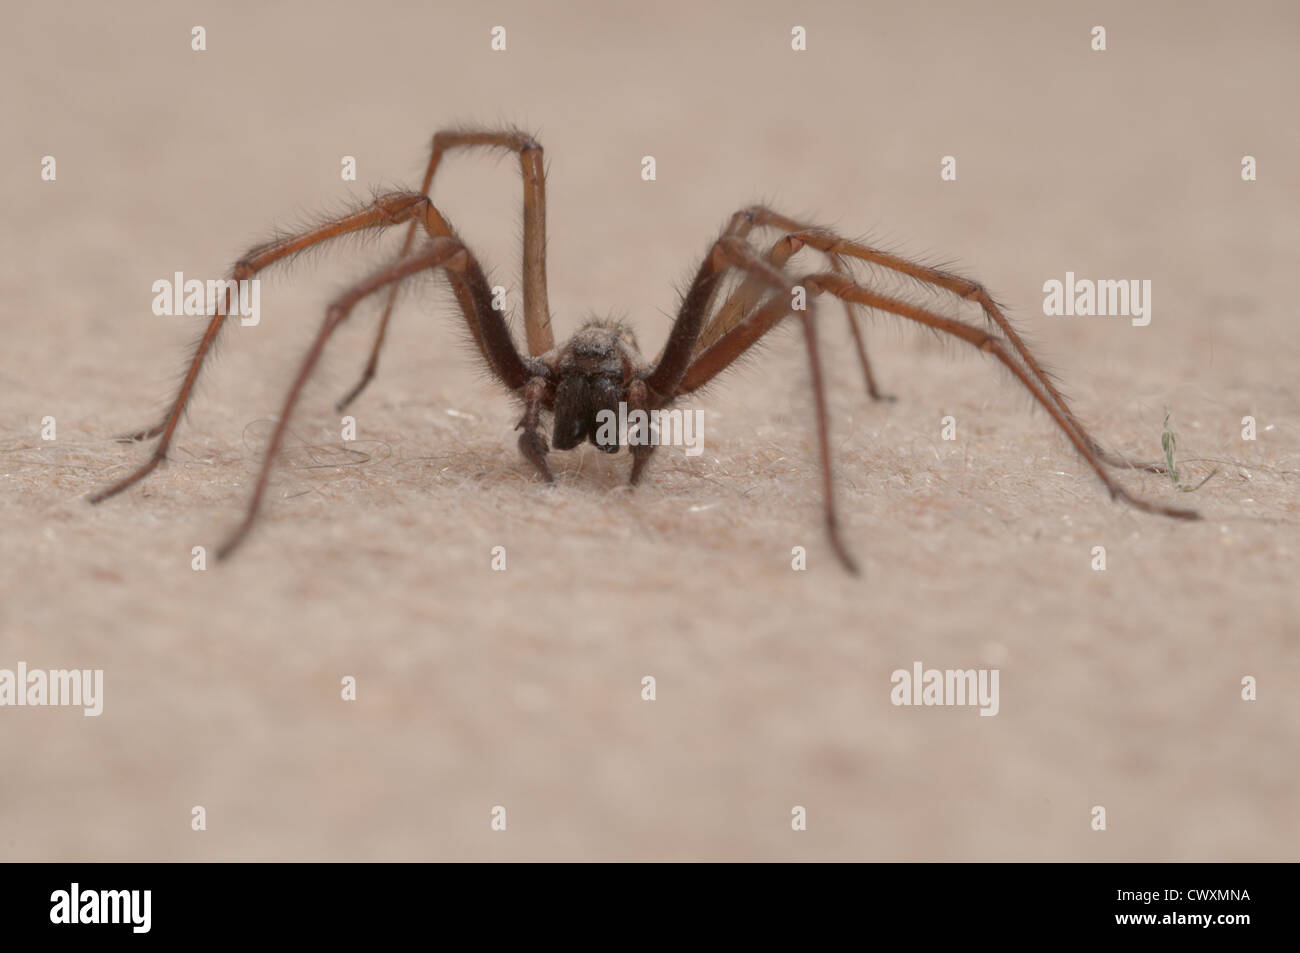 House spider (Tegenaria gigantea) Sussex, UK. September indoors Stock Photo